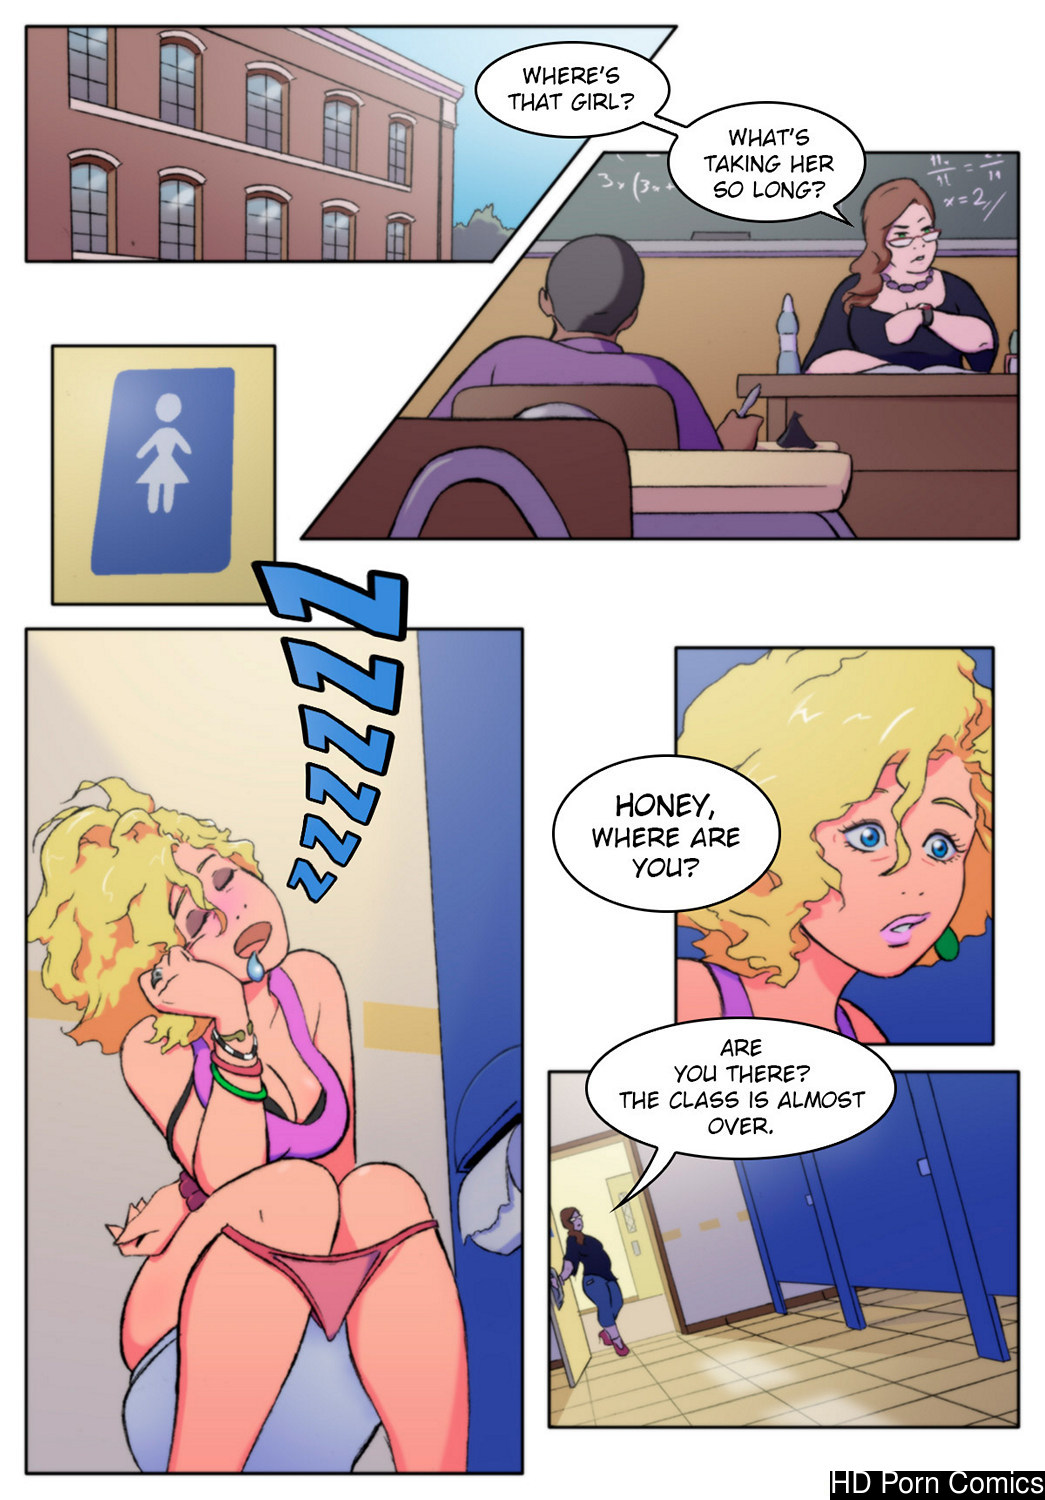 Bathroom Cartoon Sexy - Girls Bathroom comic porn | HD Porn Comics